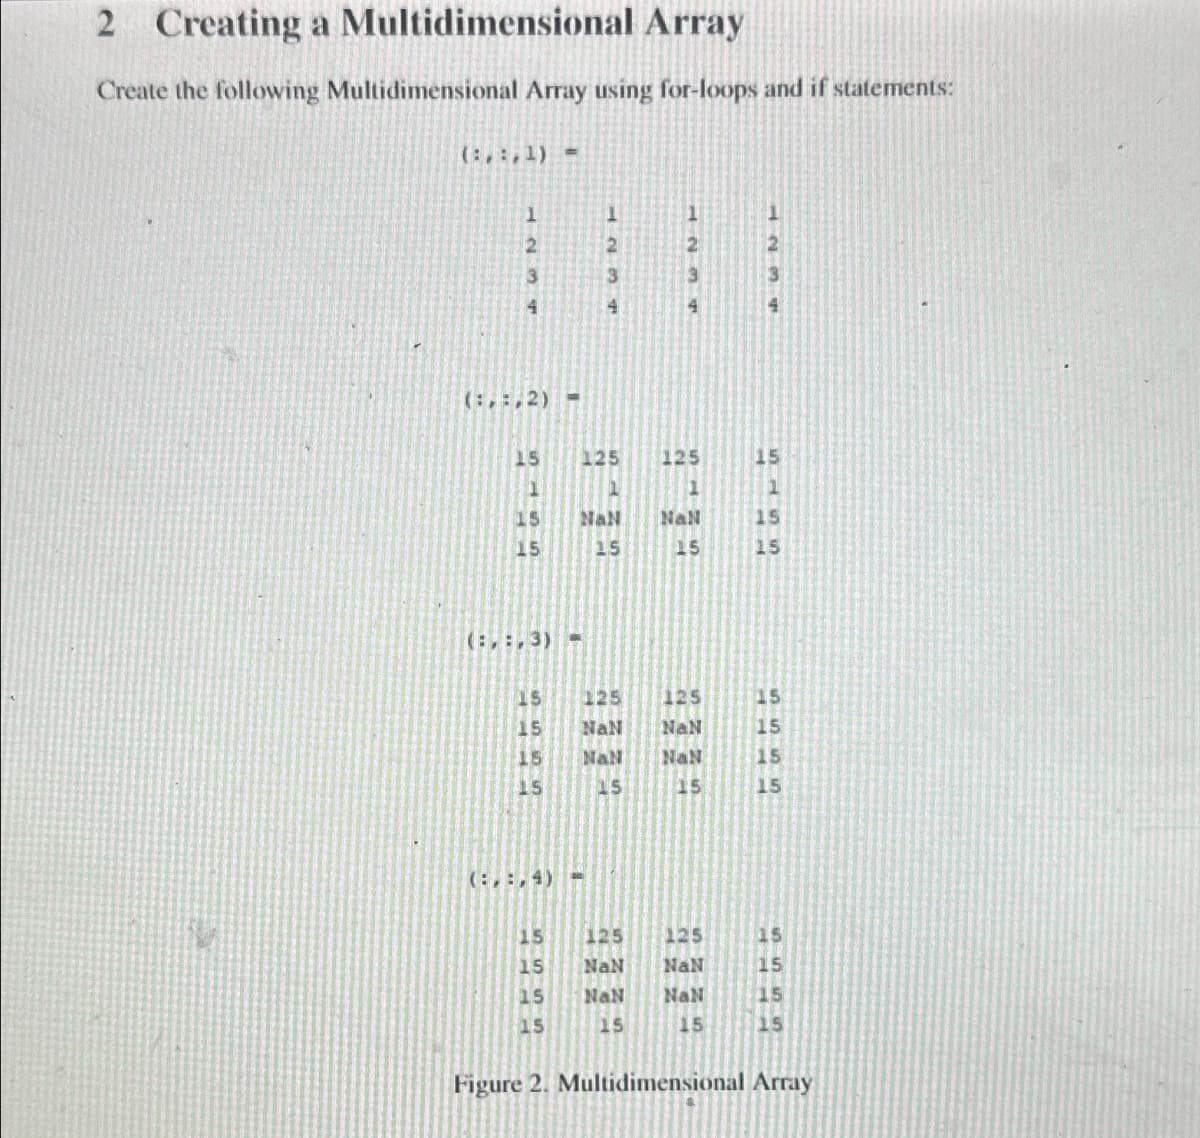 2 Creating a Multidimensional Array
Create the following Multidimensional Array using for-loops and if statements:
(:,:,1) =
(:,:,2) =
15 125
125
15
1
1
15
NAN
NaN
15
15
15
15
15
(:,:,3)-
15
125
125
15
15
NaN
NaN
15
15
NaN NaN
15
15
15
15
15
(:,:,4)=
5555
125
125
15
NaN
NaN
15
NaN
NaN
15
15
15
15
Figure 2. Multidimensional Array